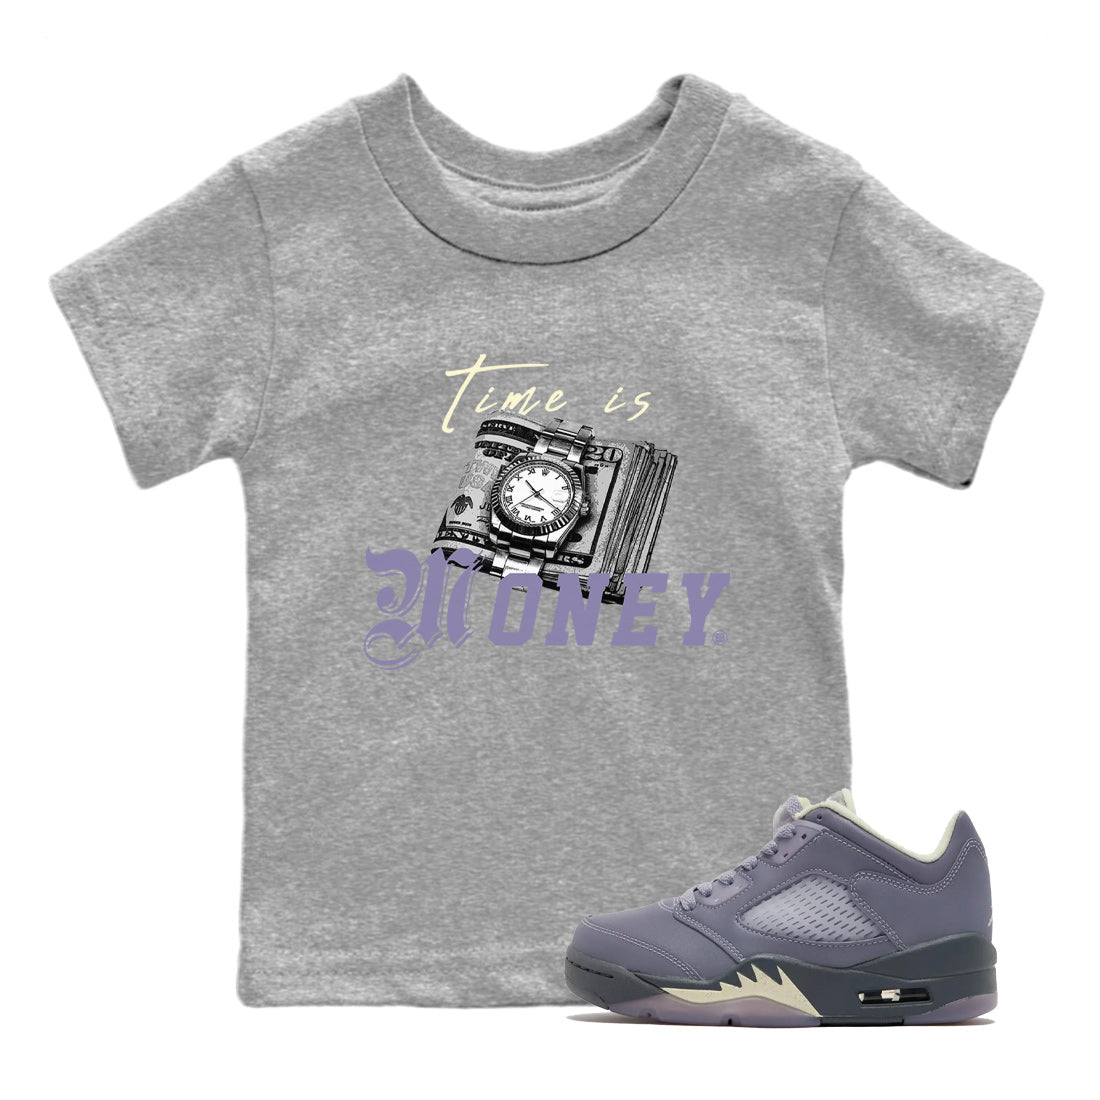 5s Indigo Haze Sneaker Match Tees Time Is Money Sneaker T-Shirt Air Jordan 5 Indigo Haze Sneaker Release Tees Kids Shirts Heather Grey 1